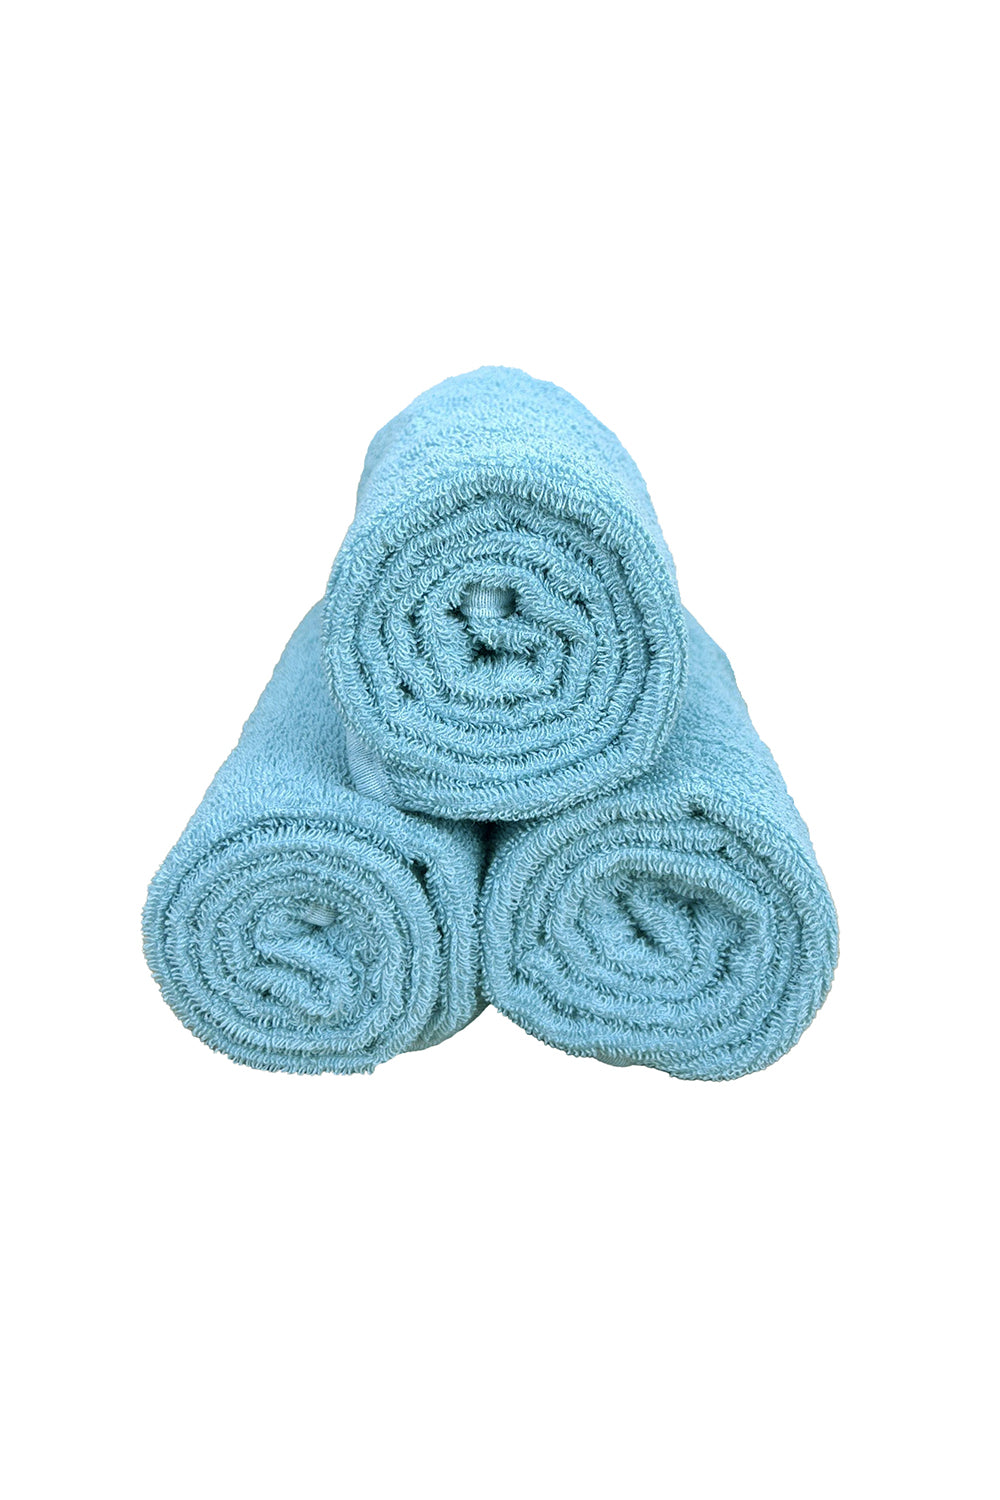 Premium CBD-Infused Towels : CBD-Infused Towels